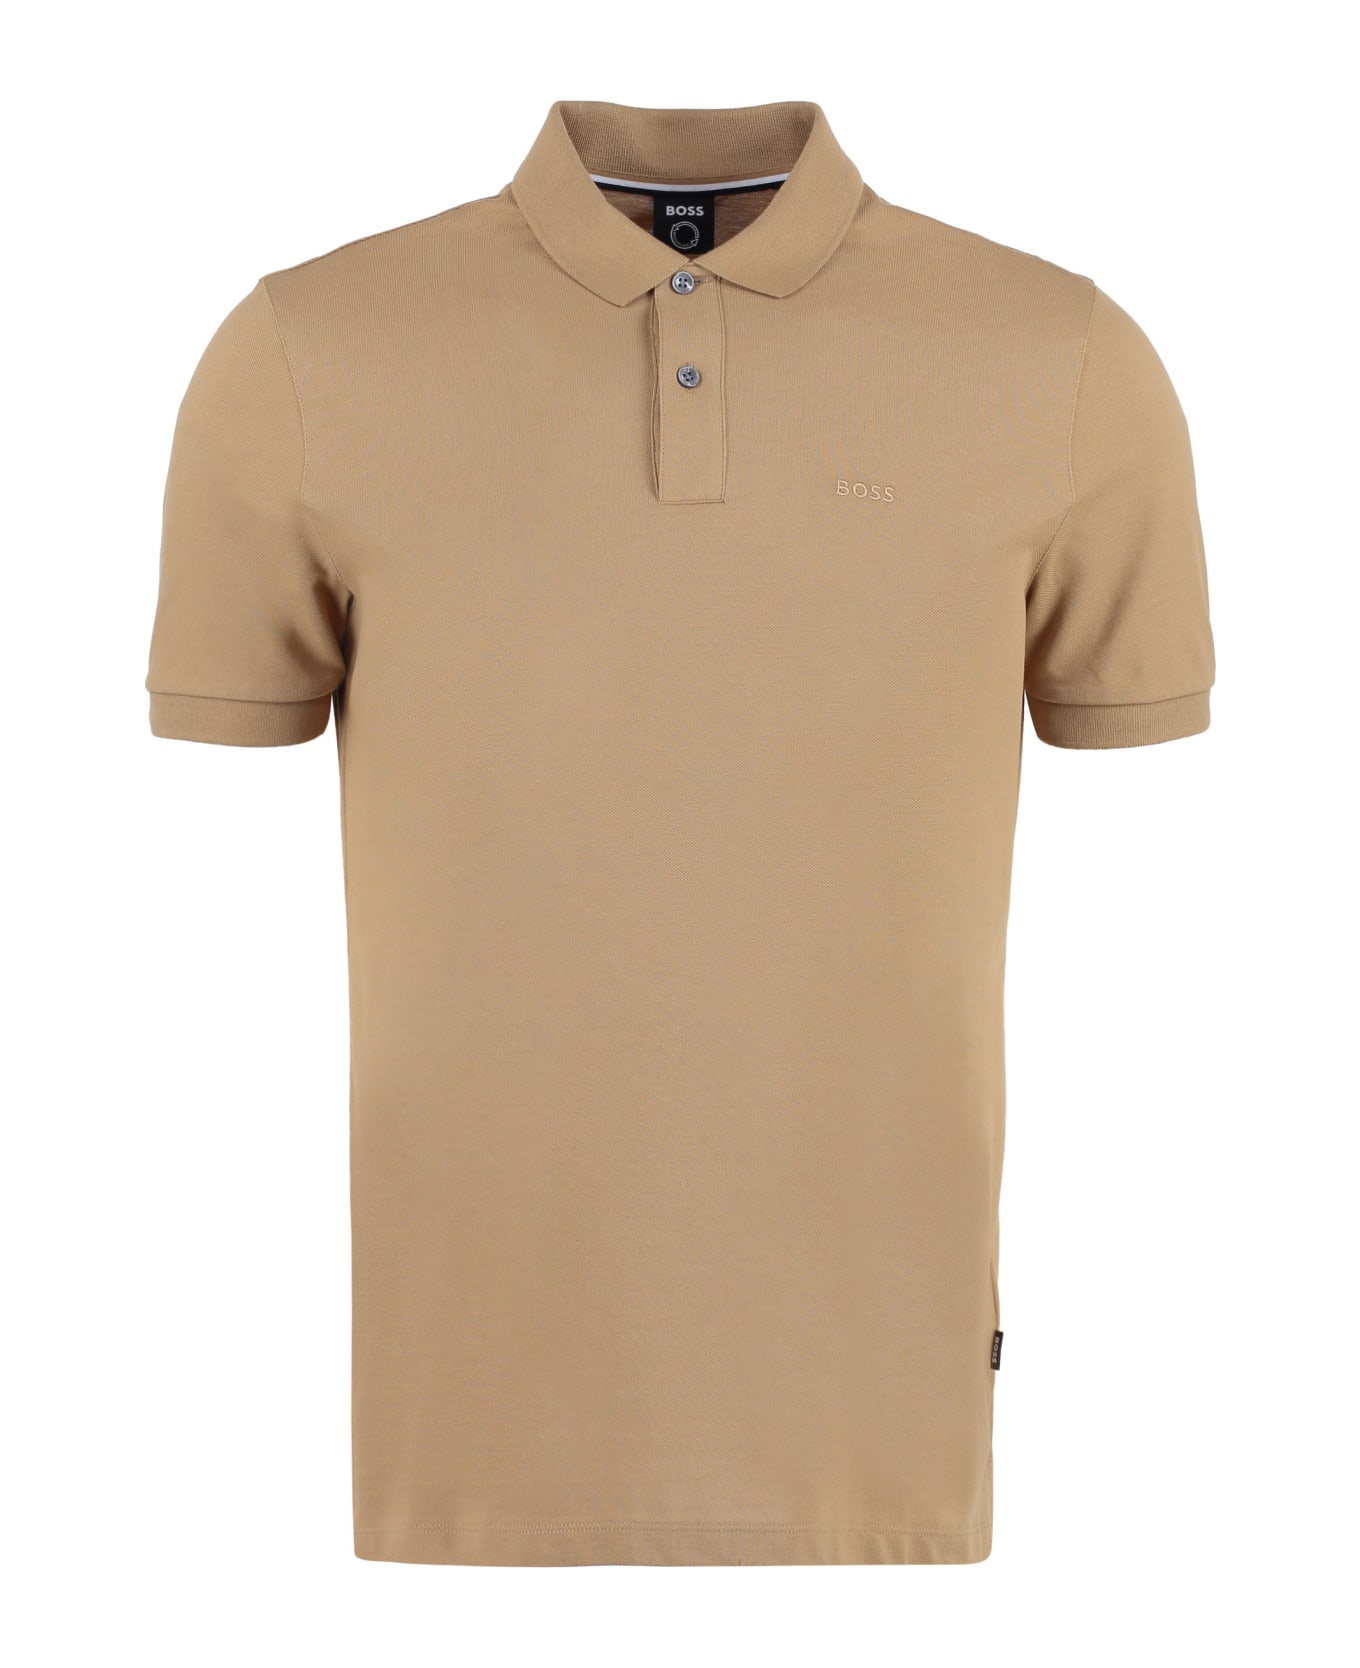 Hugo Boss Pallas Short Sleeve Cotton Polo Shirt - Medium Beige